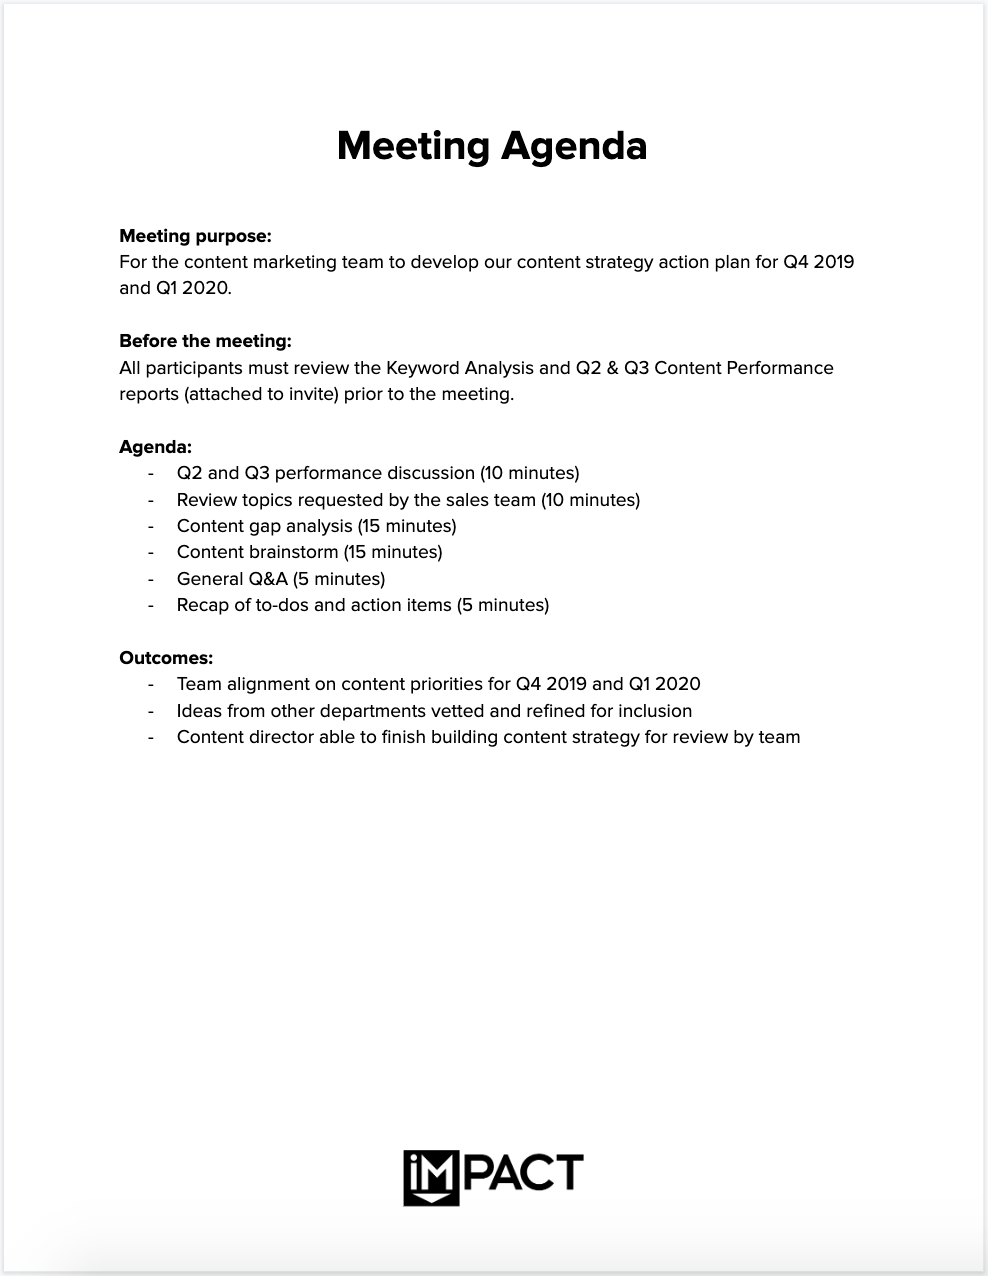 marketing meeting agenda template